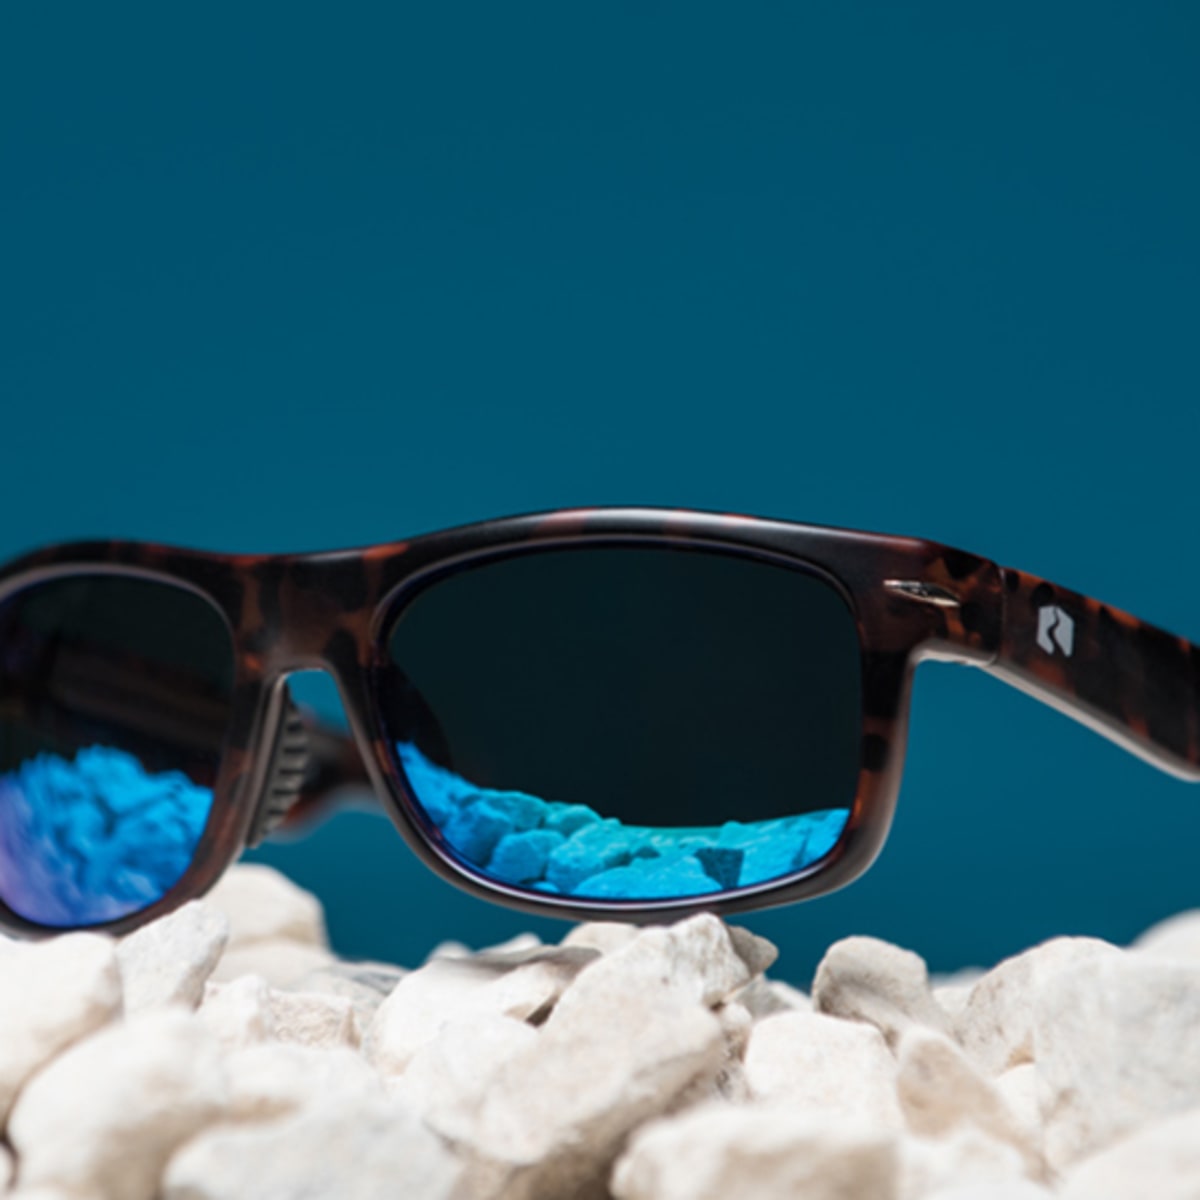 Sunglasses Review  Rheos Eddies Floating Polarized - Men's Journal